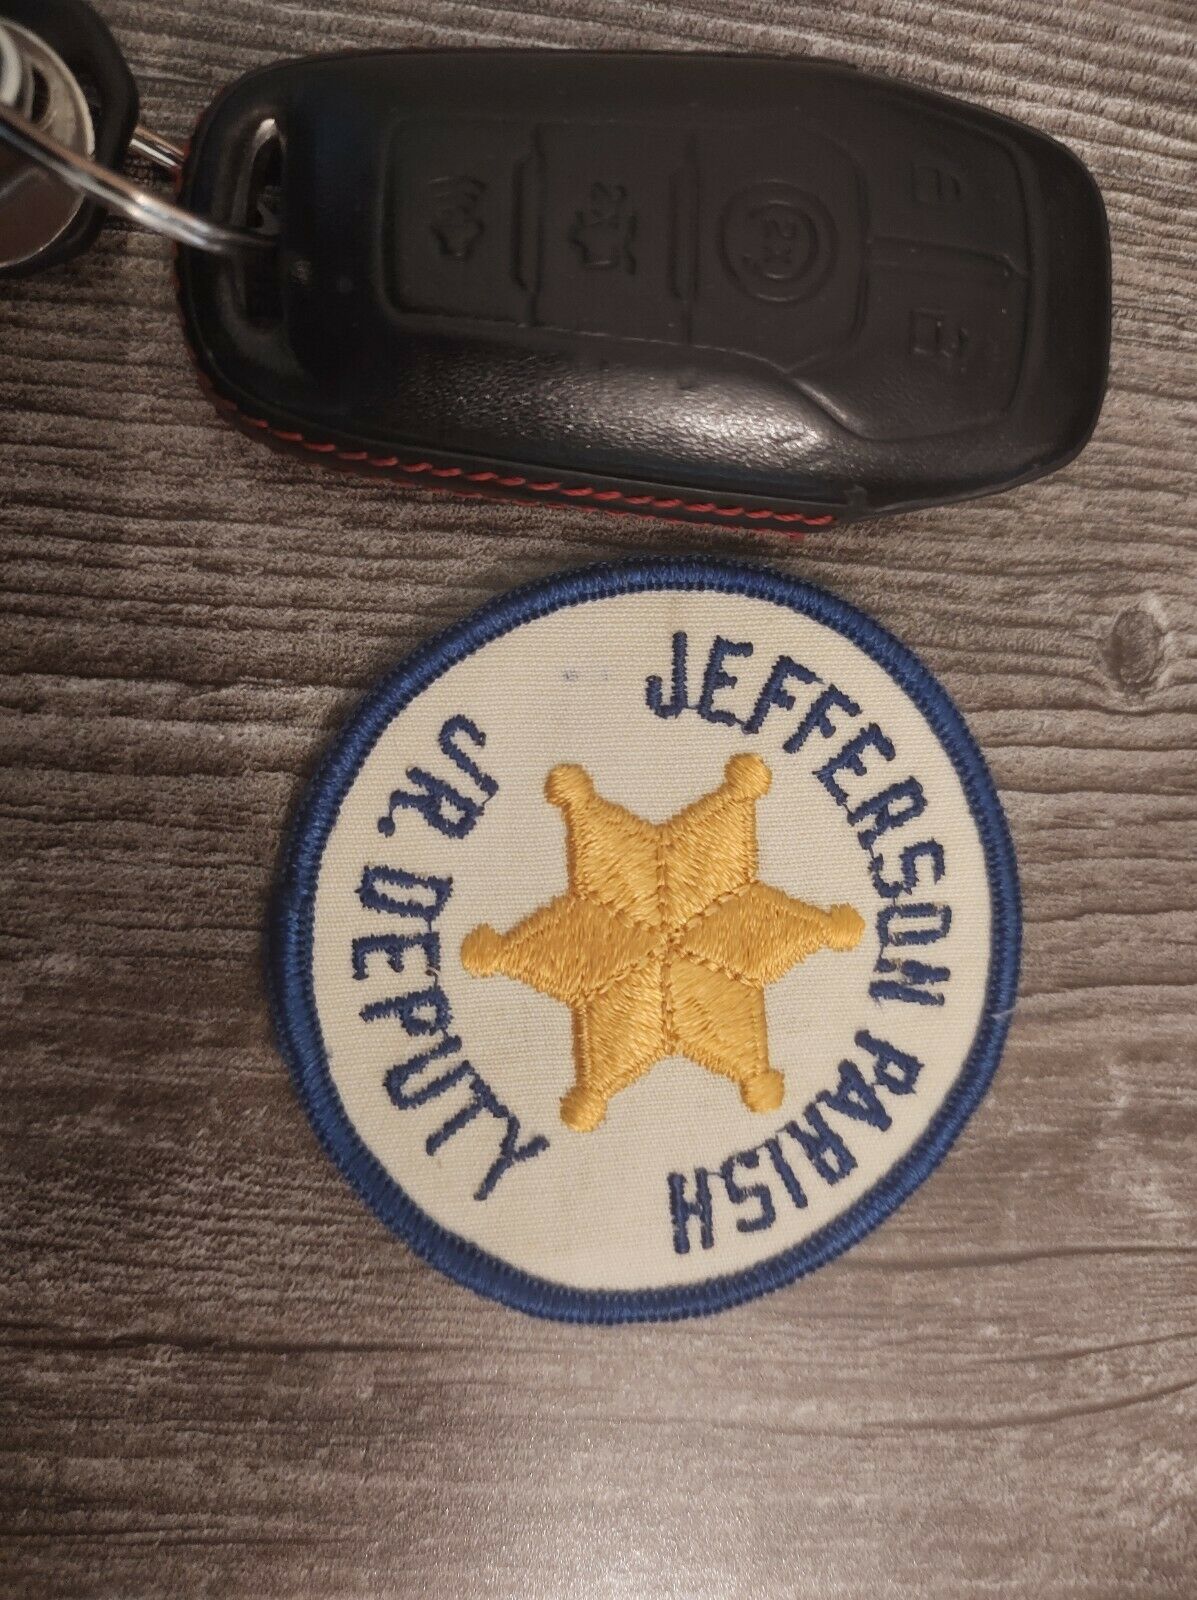 Jr Deputy Jefferson Parish Louisiana Sheriff Police Patch New Orleans State Fire